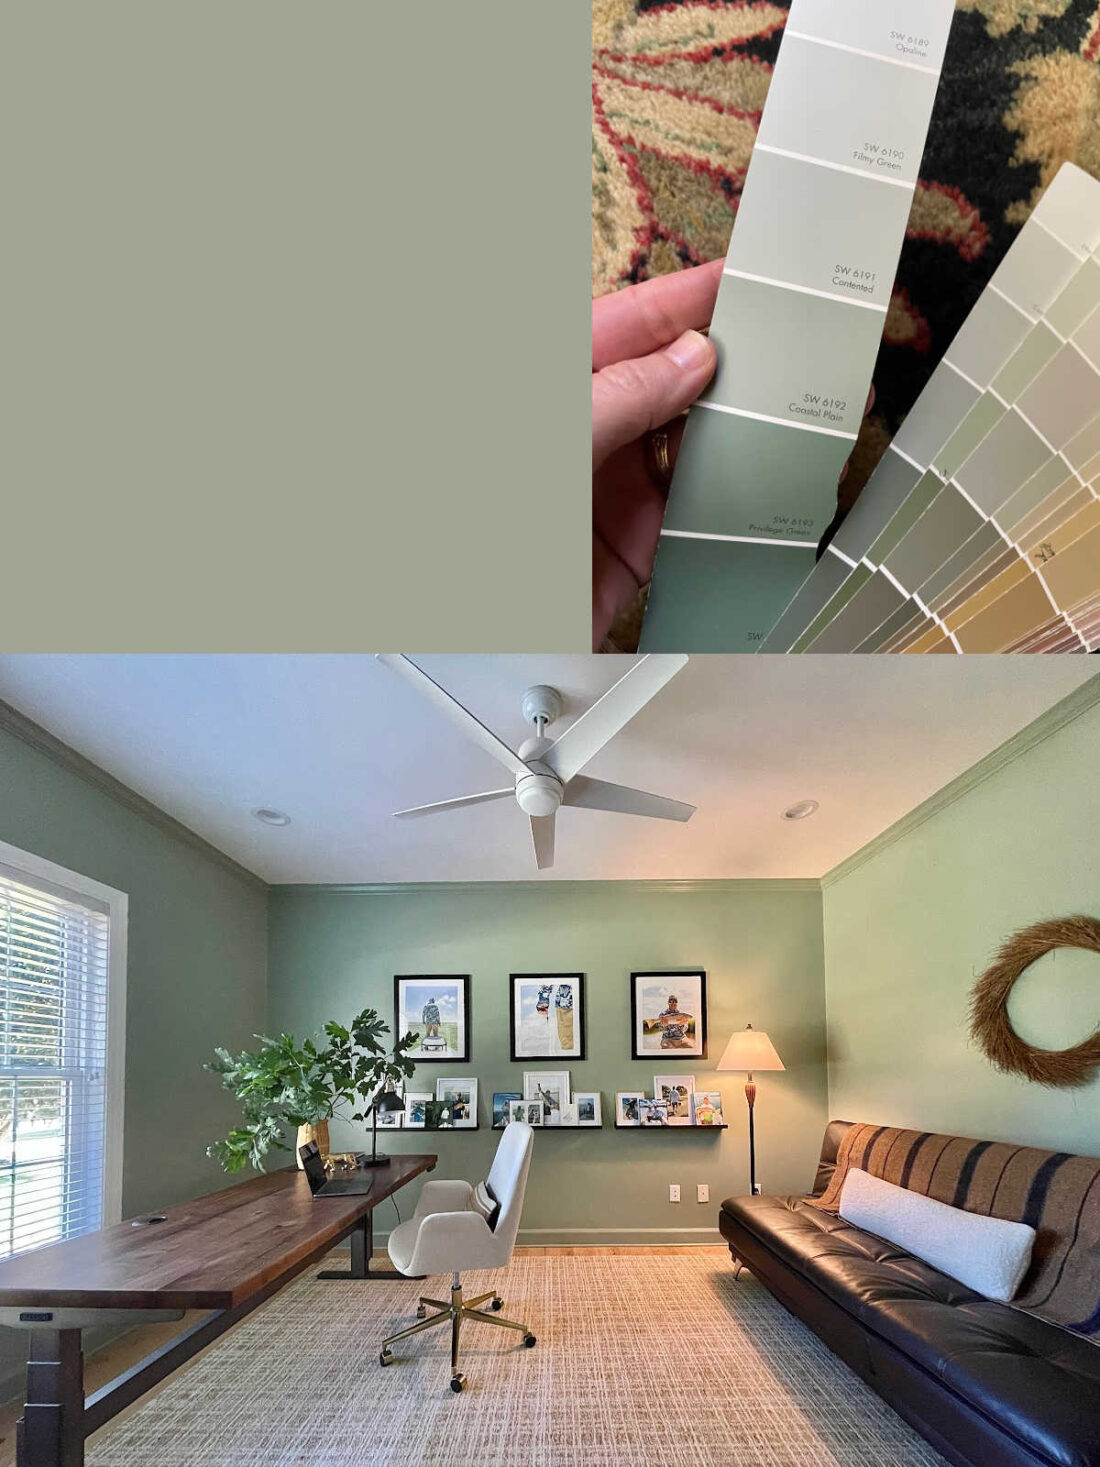 Paint color comparison of coastal plain using home office photo, paint deck and swatch